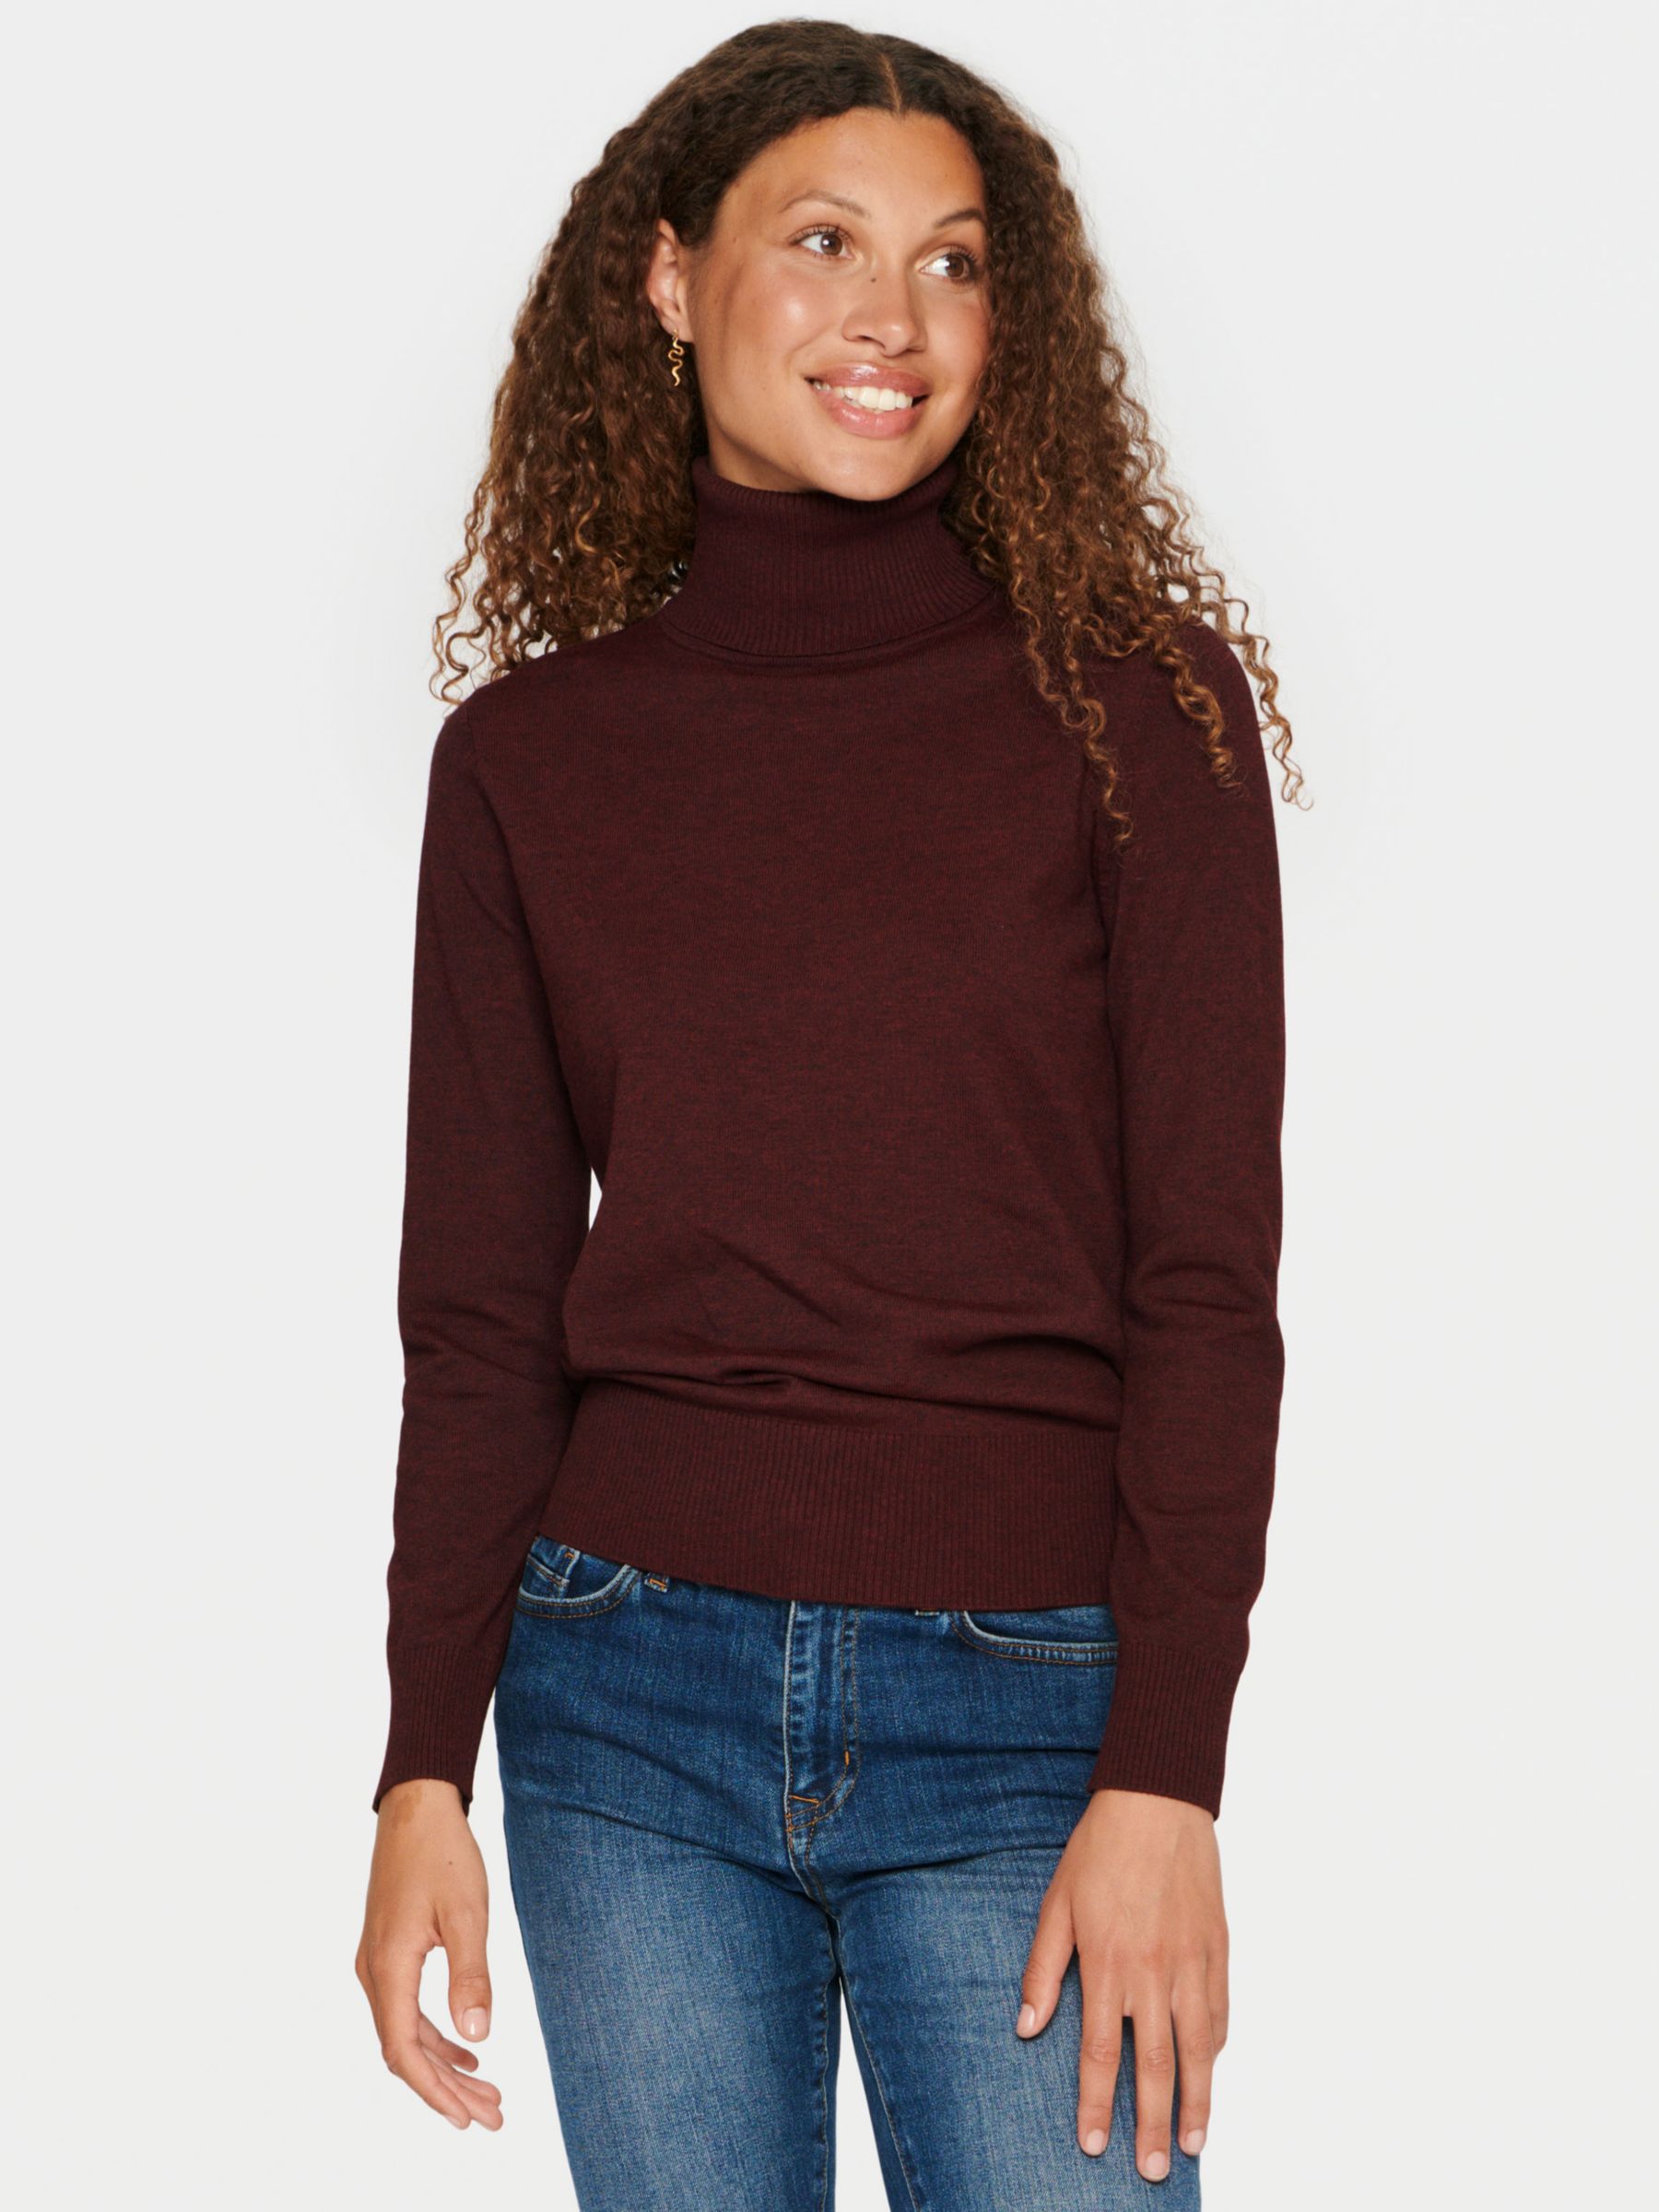 Джемпер-пуловер Mila с высоким воротником Saint Tropez, тони порт меланж